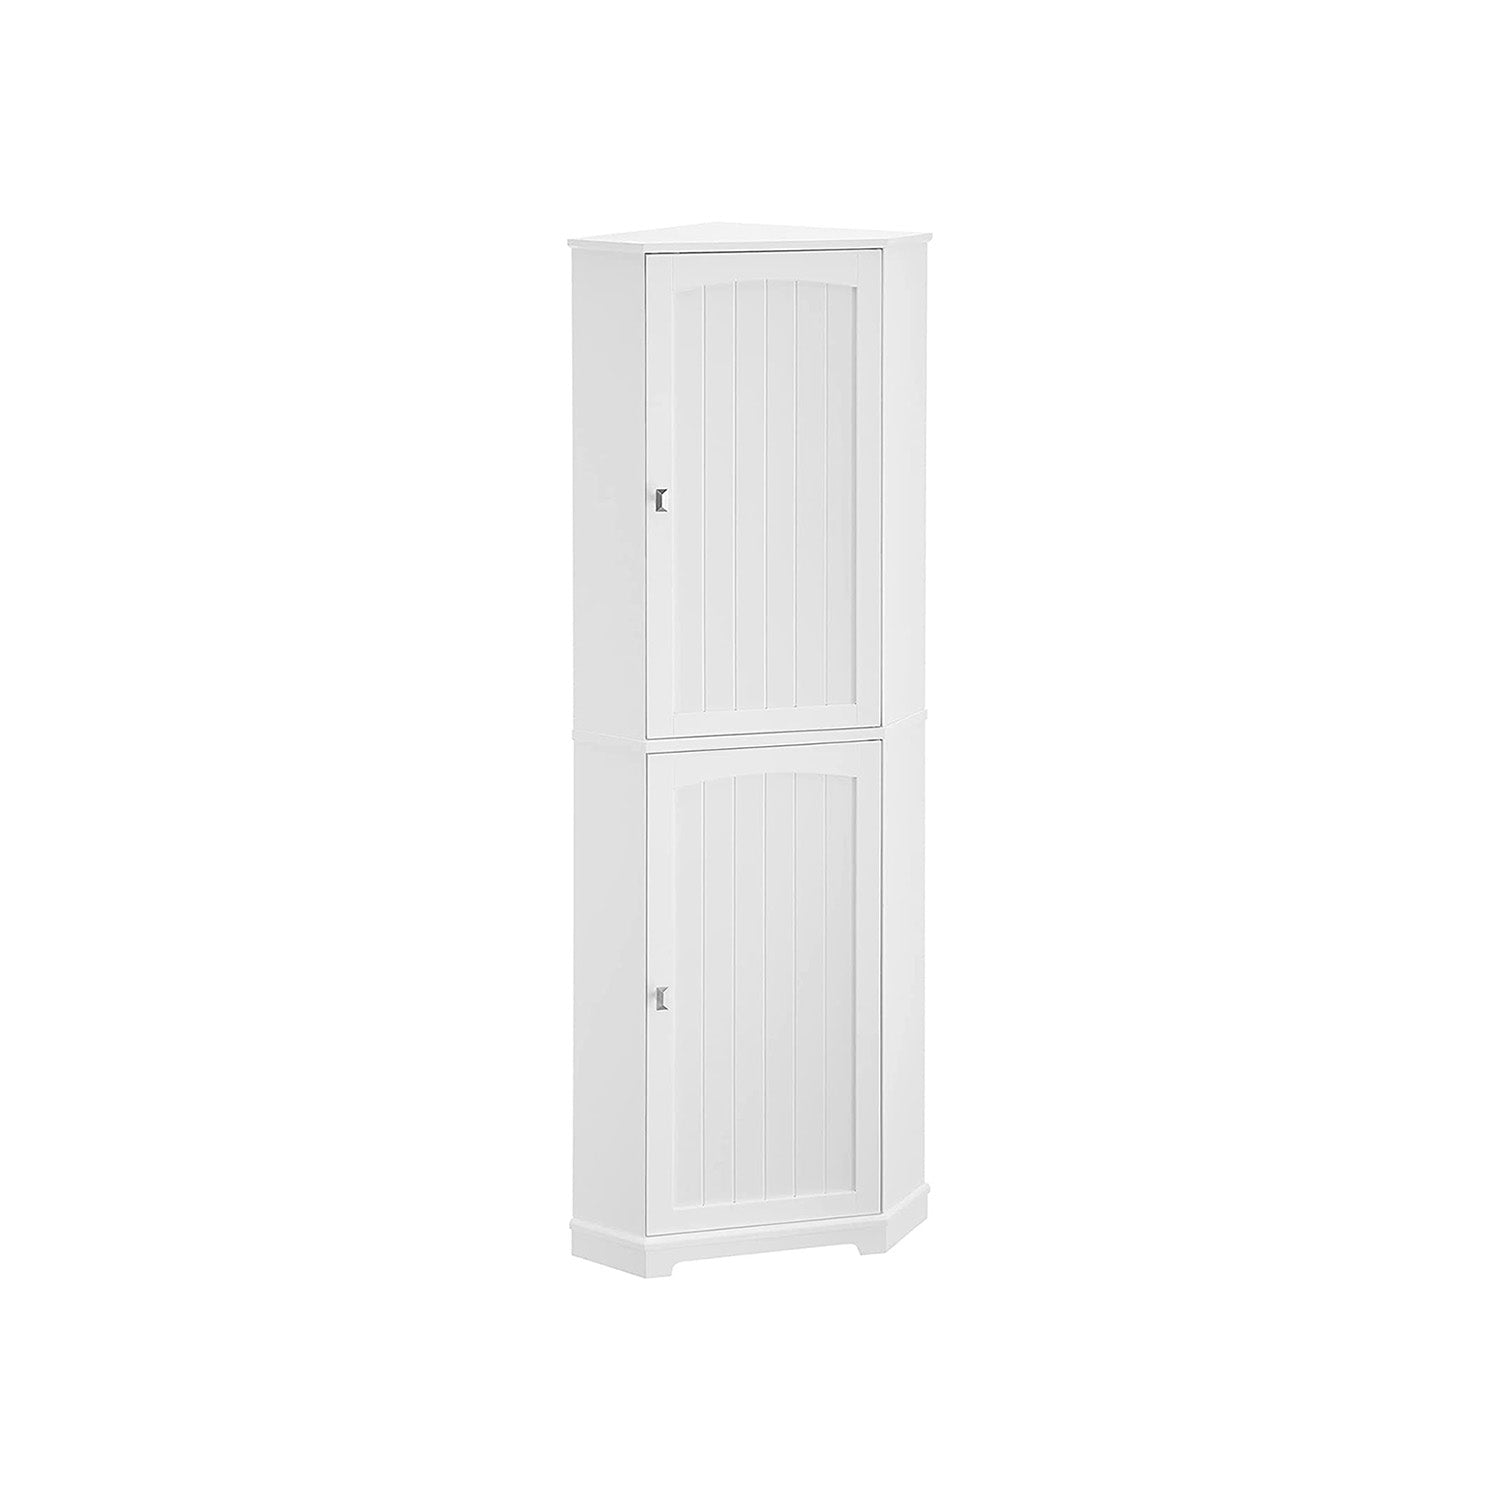 VASAGLE Tall Corner Cabinet, Bathroom Storage Cabinet with 2 Doors